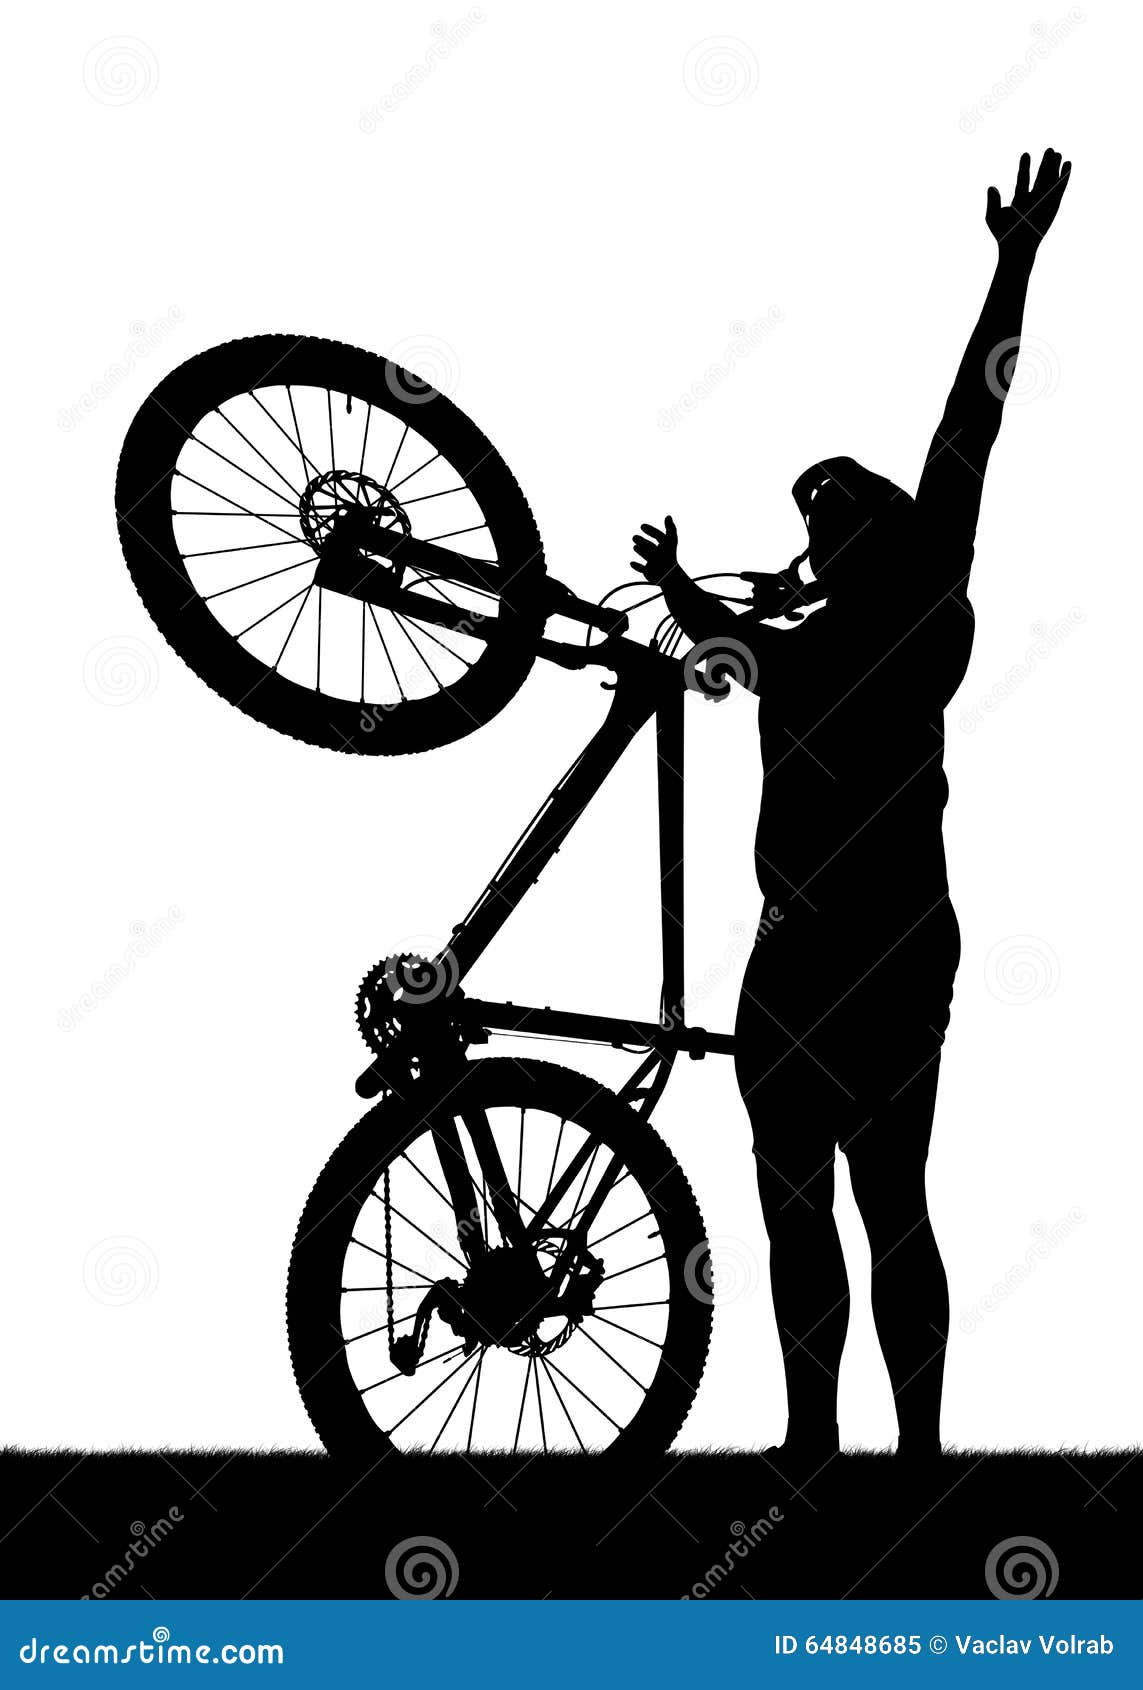 mountain bike clip art silhouette - photo #23